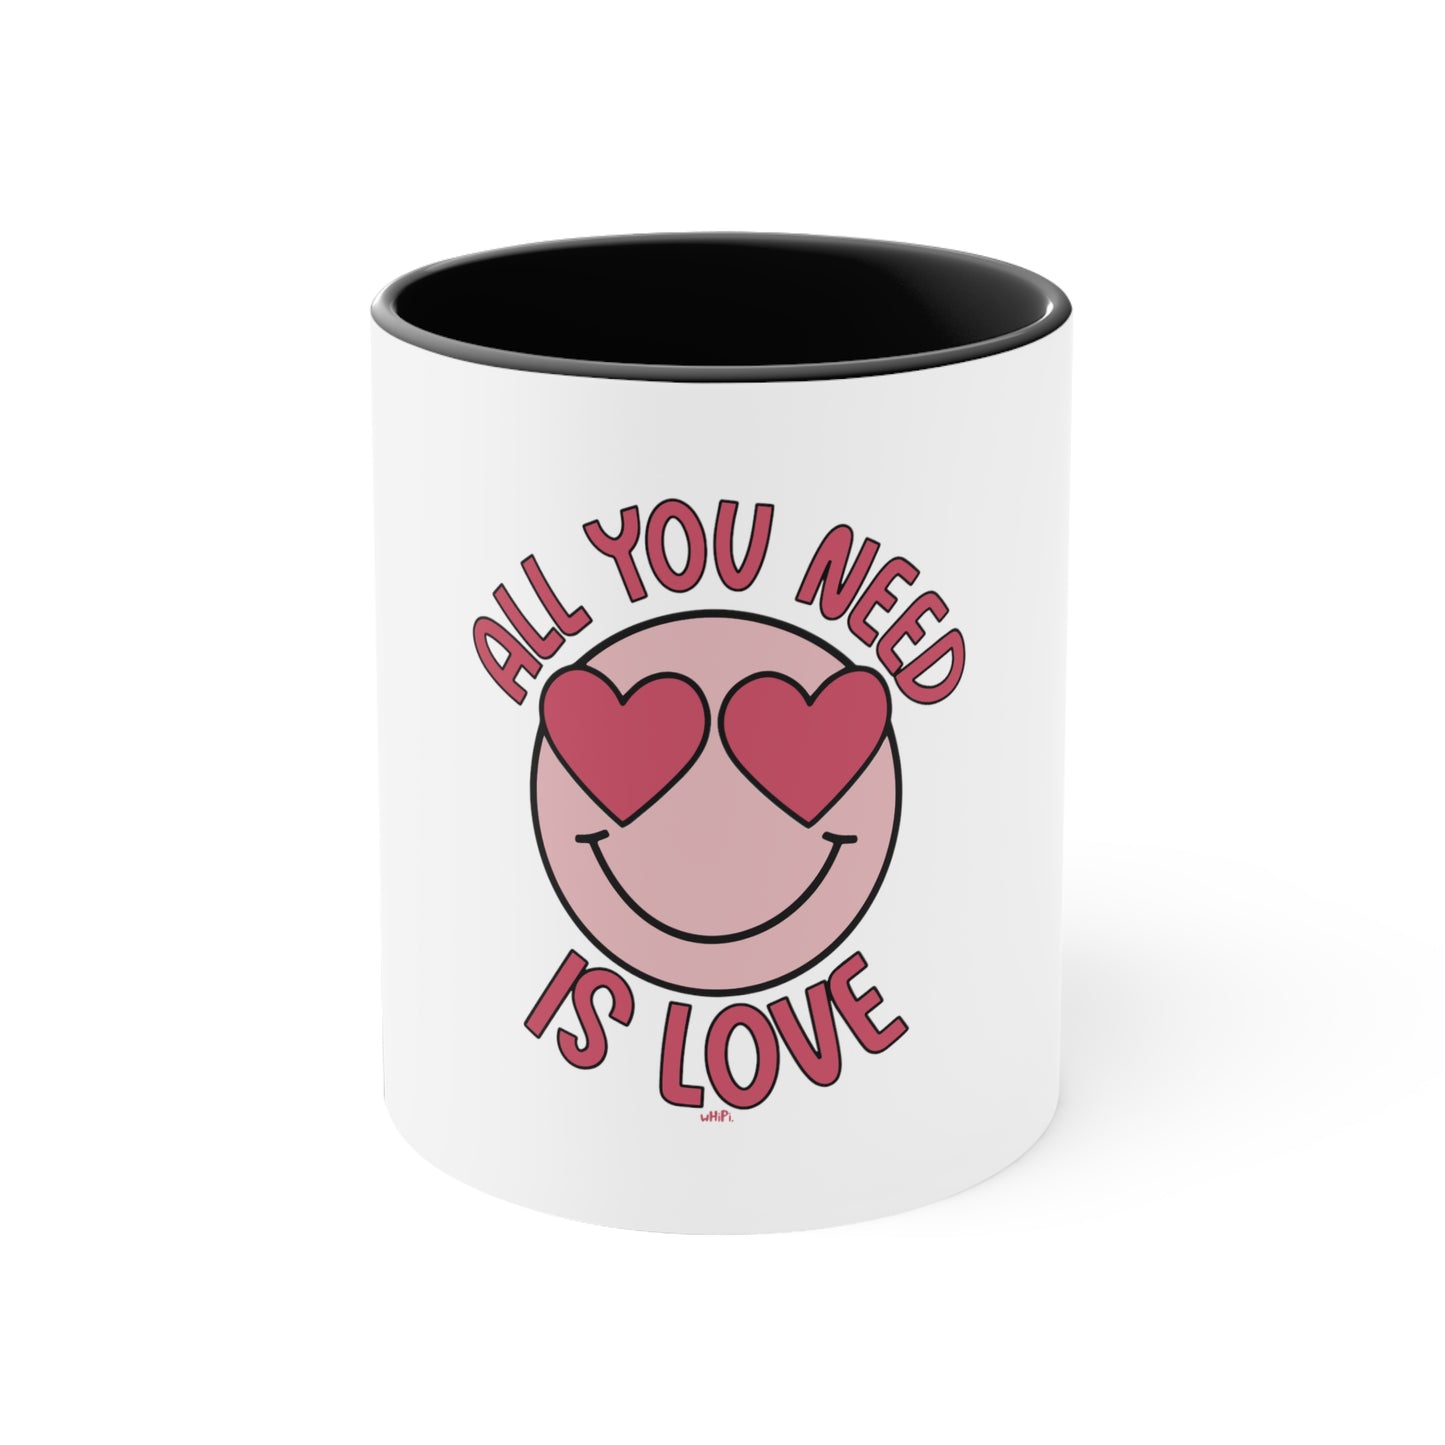 All You Need Is Love Mug